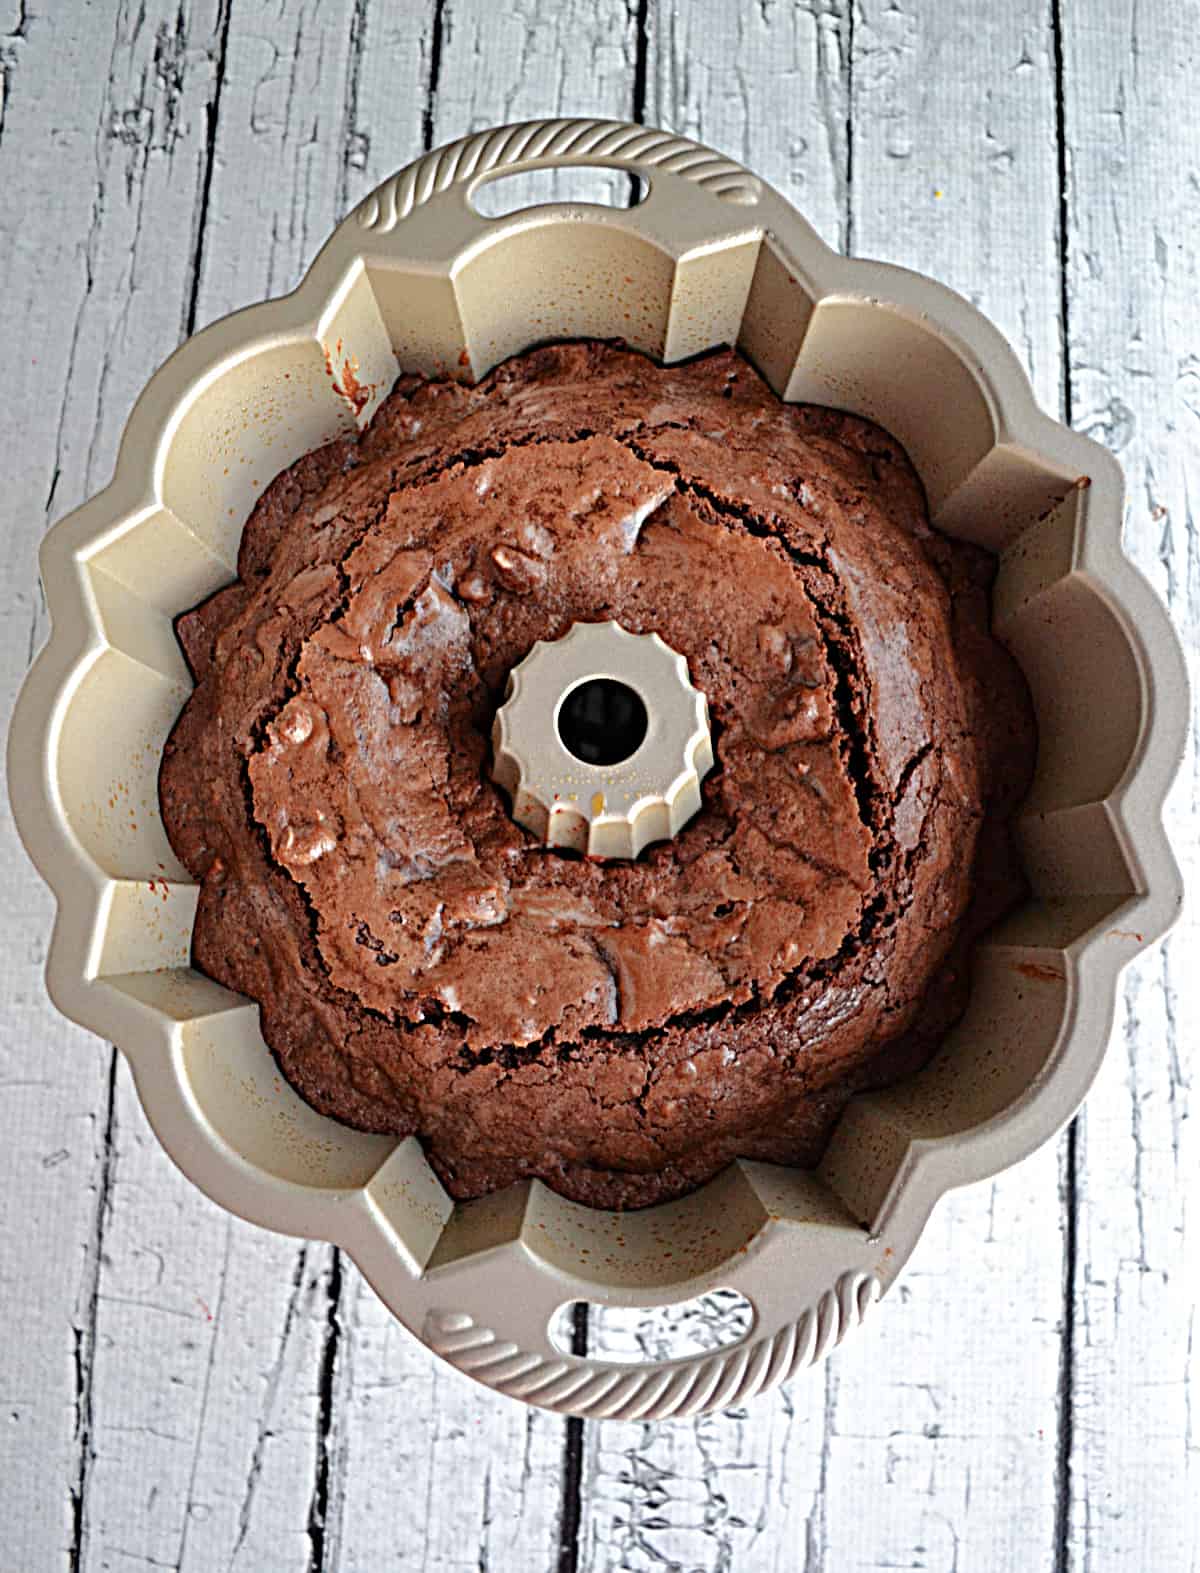 A chocolate Bundt cake in a Bundt pan.